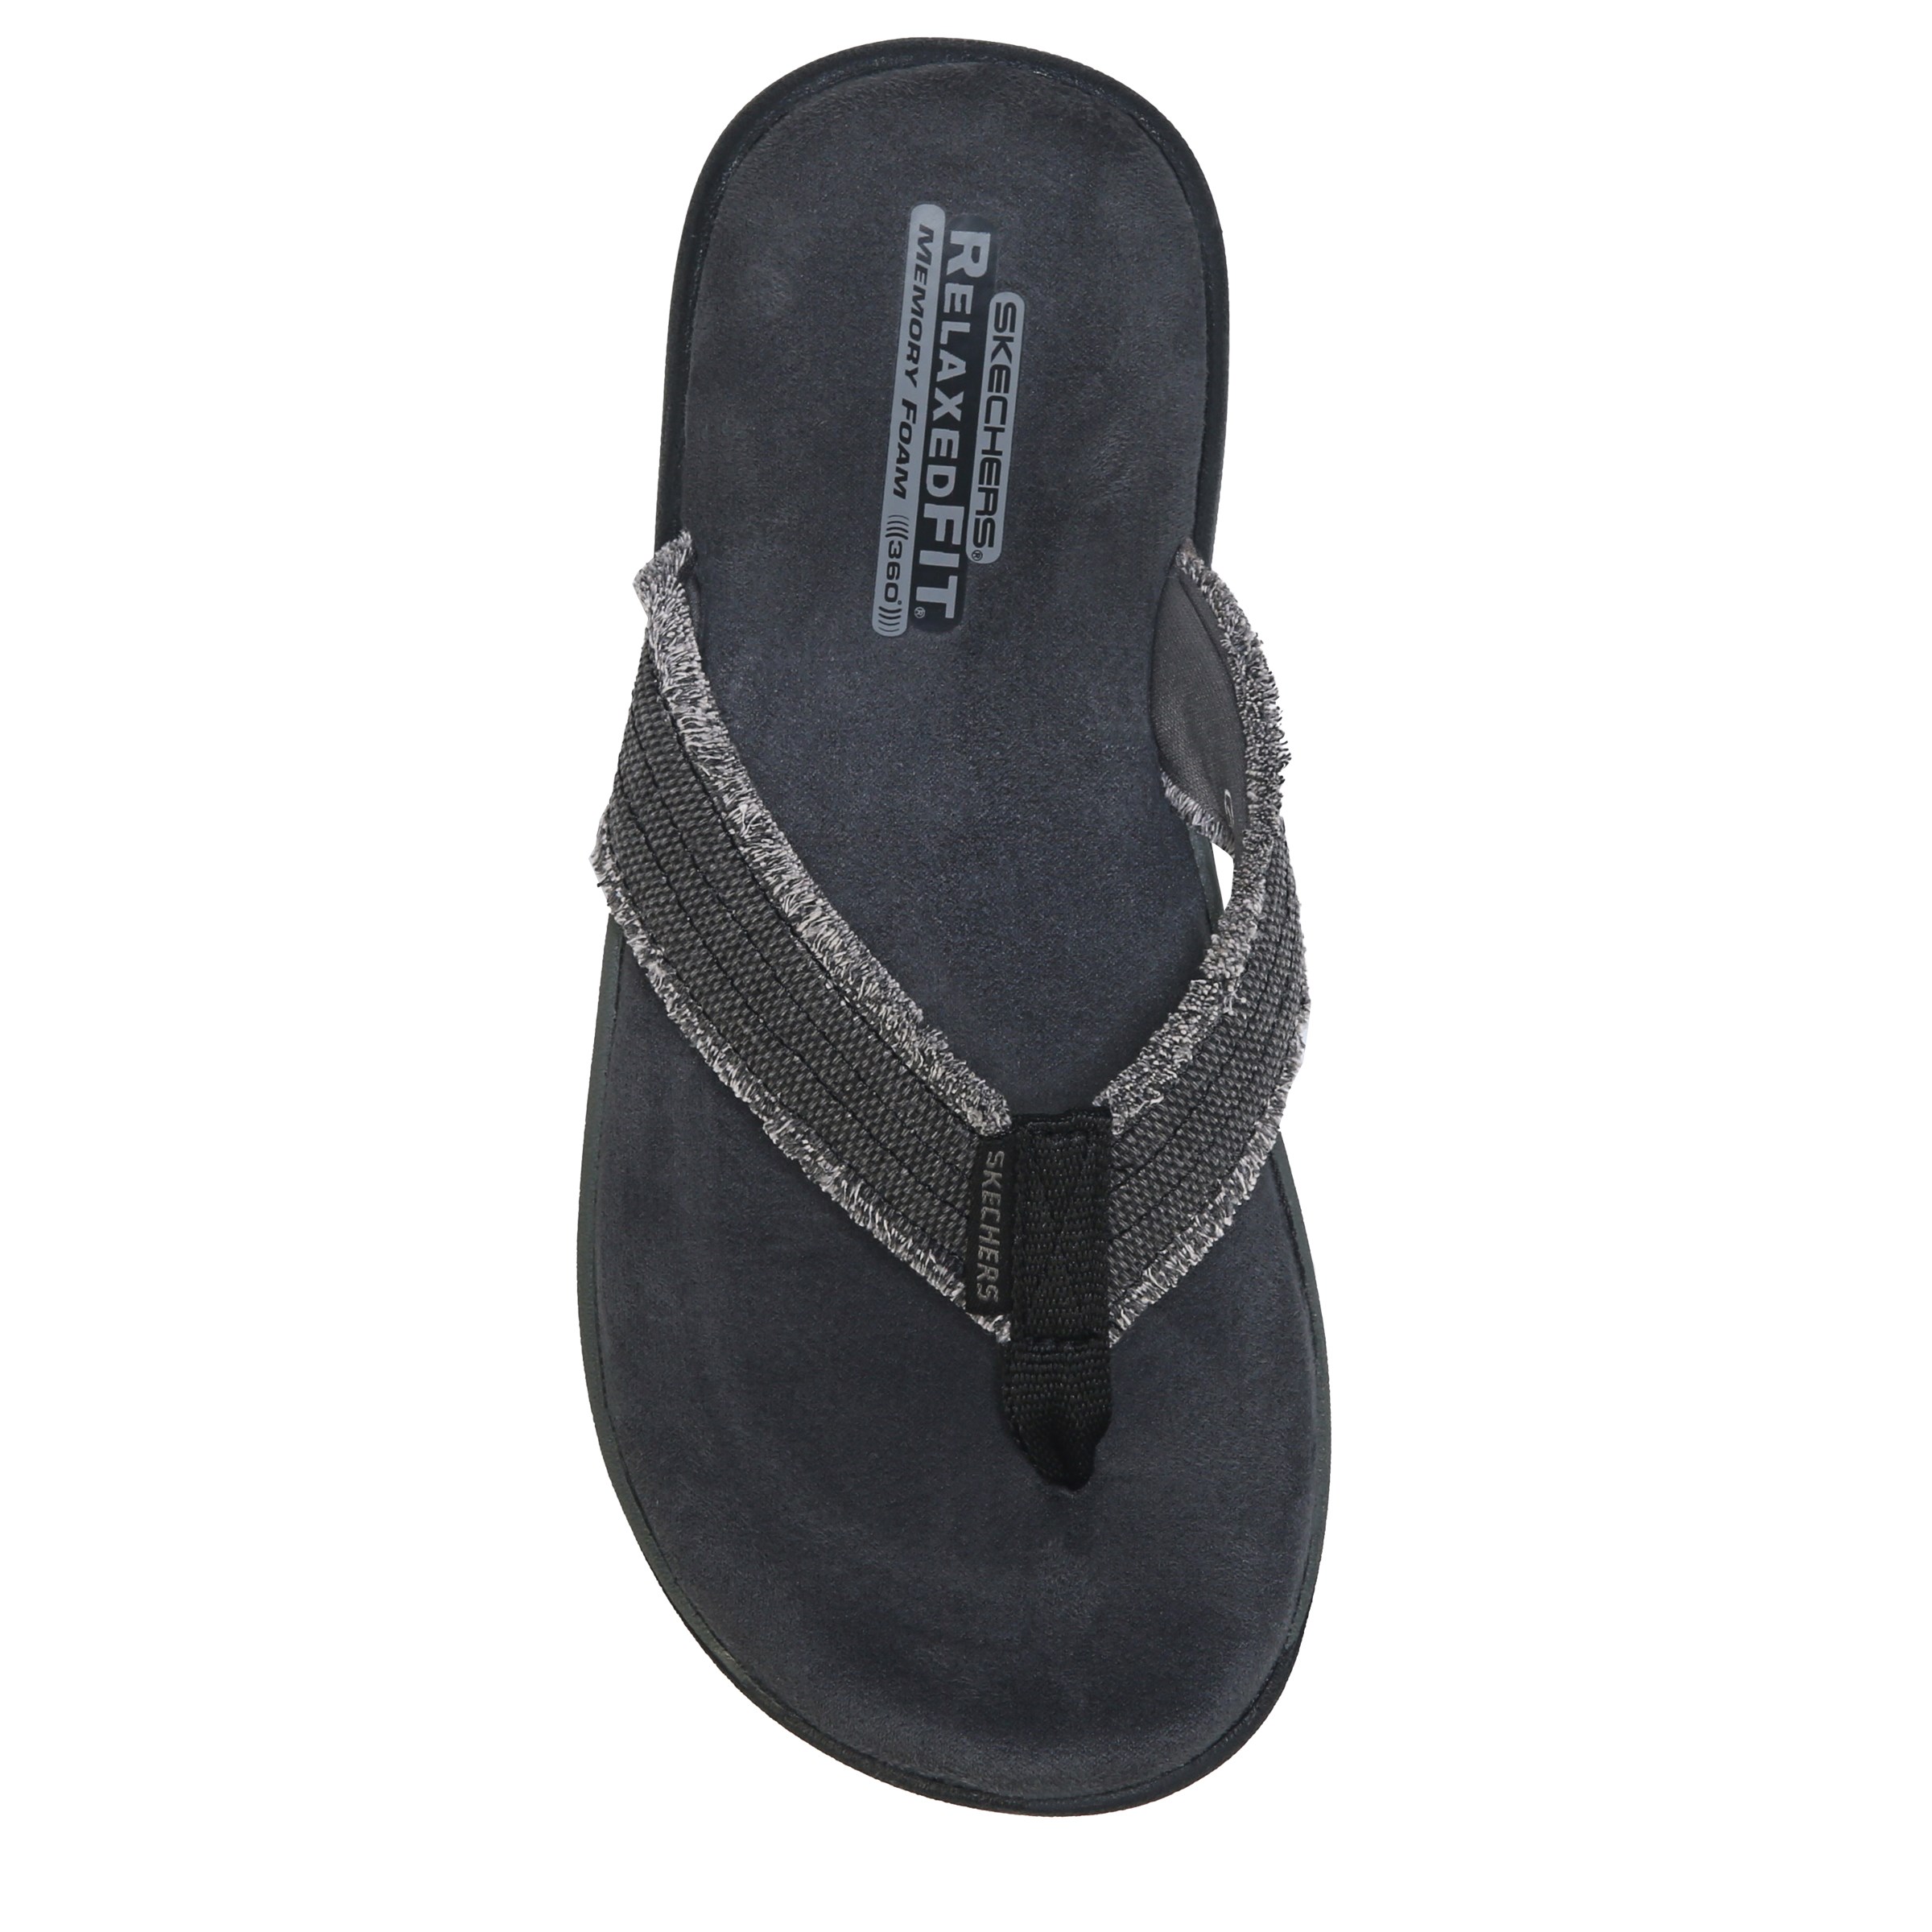 Supreme Sandals & Flip-Flops for Men - Poshmark